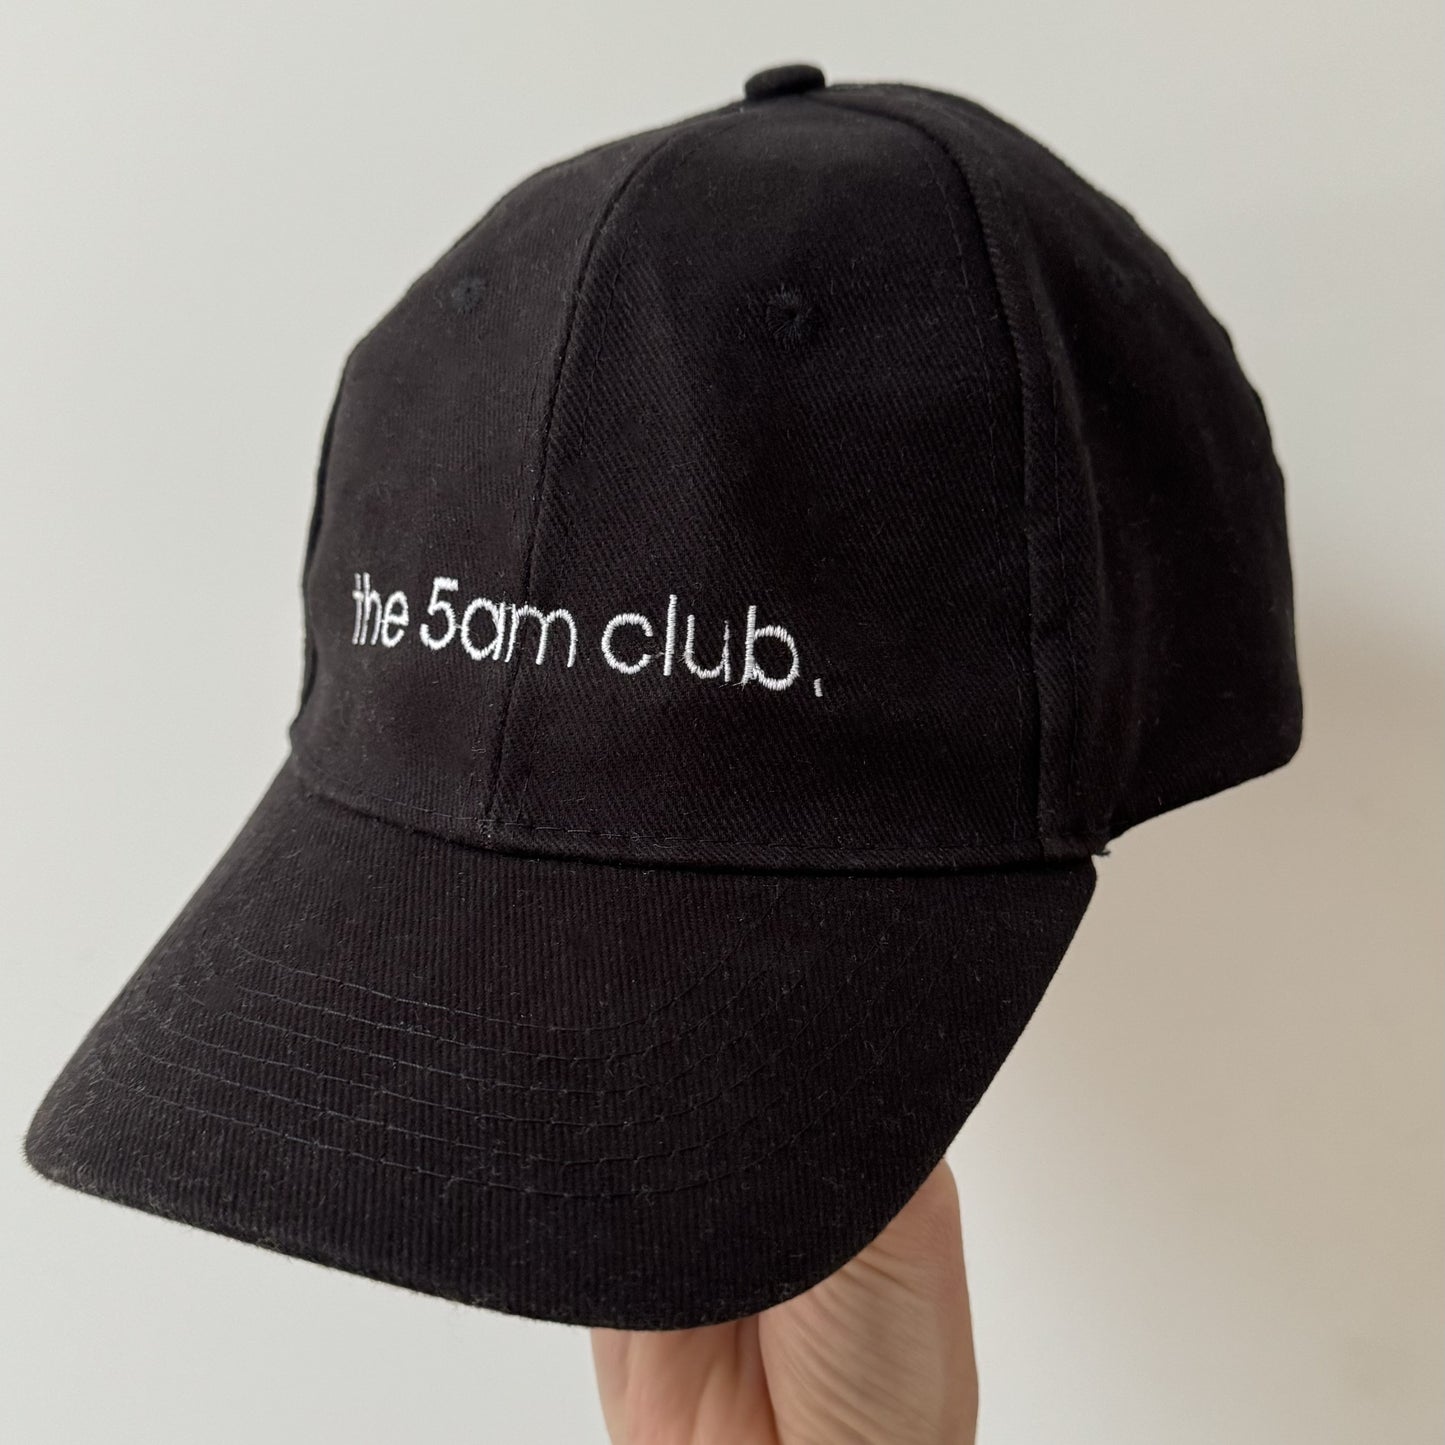 the 5am club cap